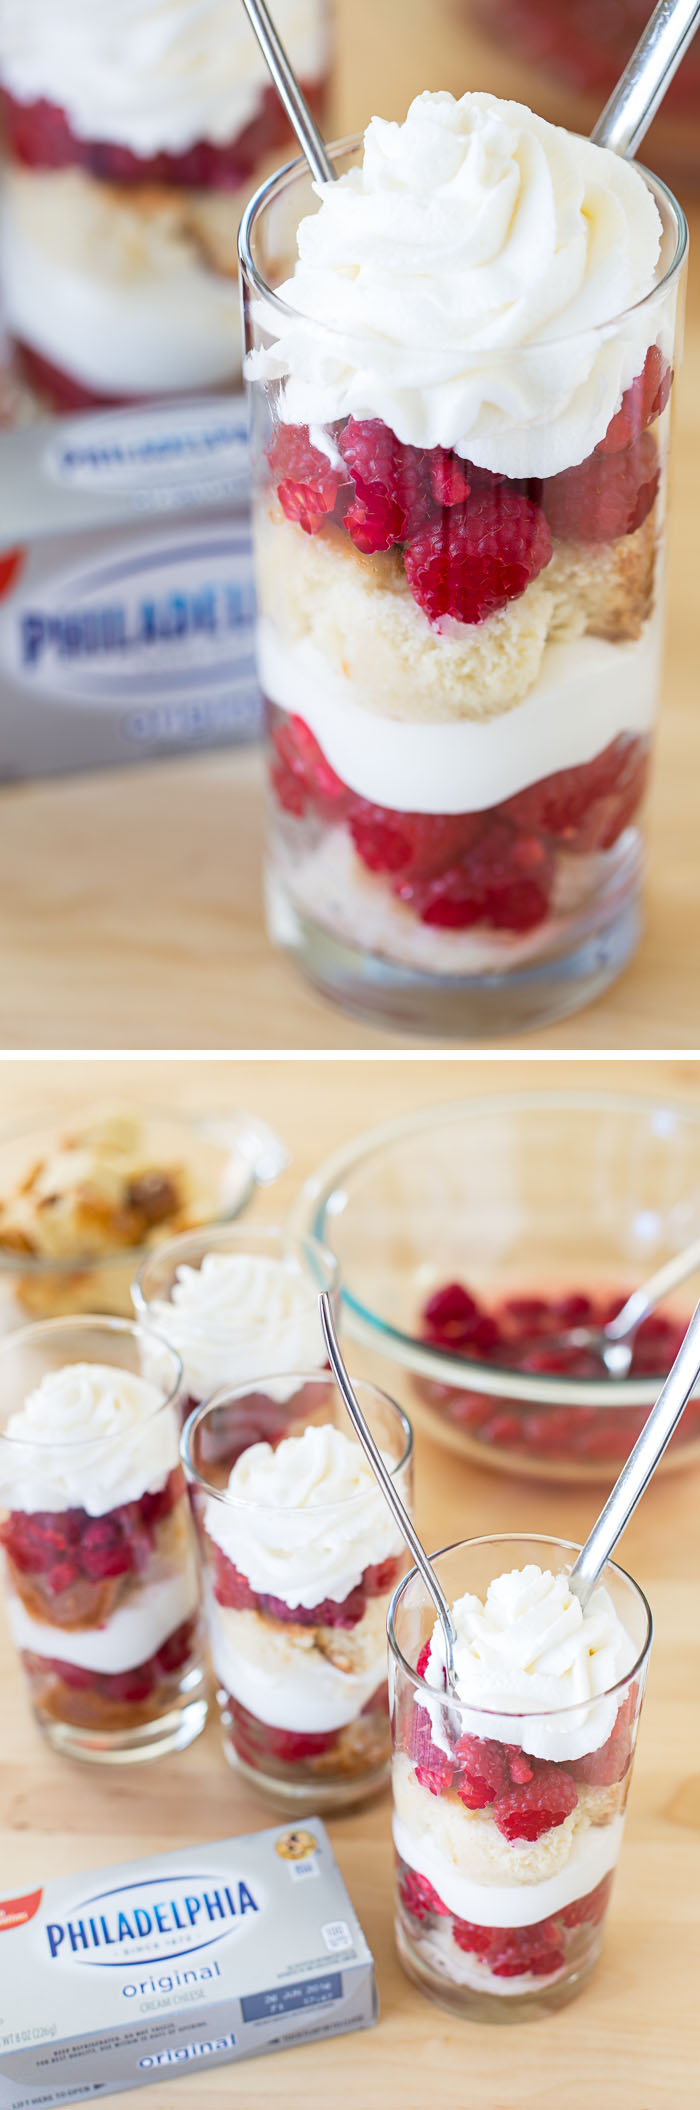 Easy Raspberry Cheesecake Double-Date Parfaits